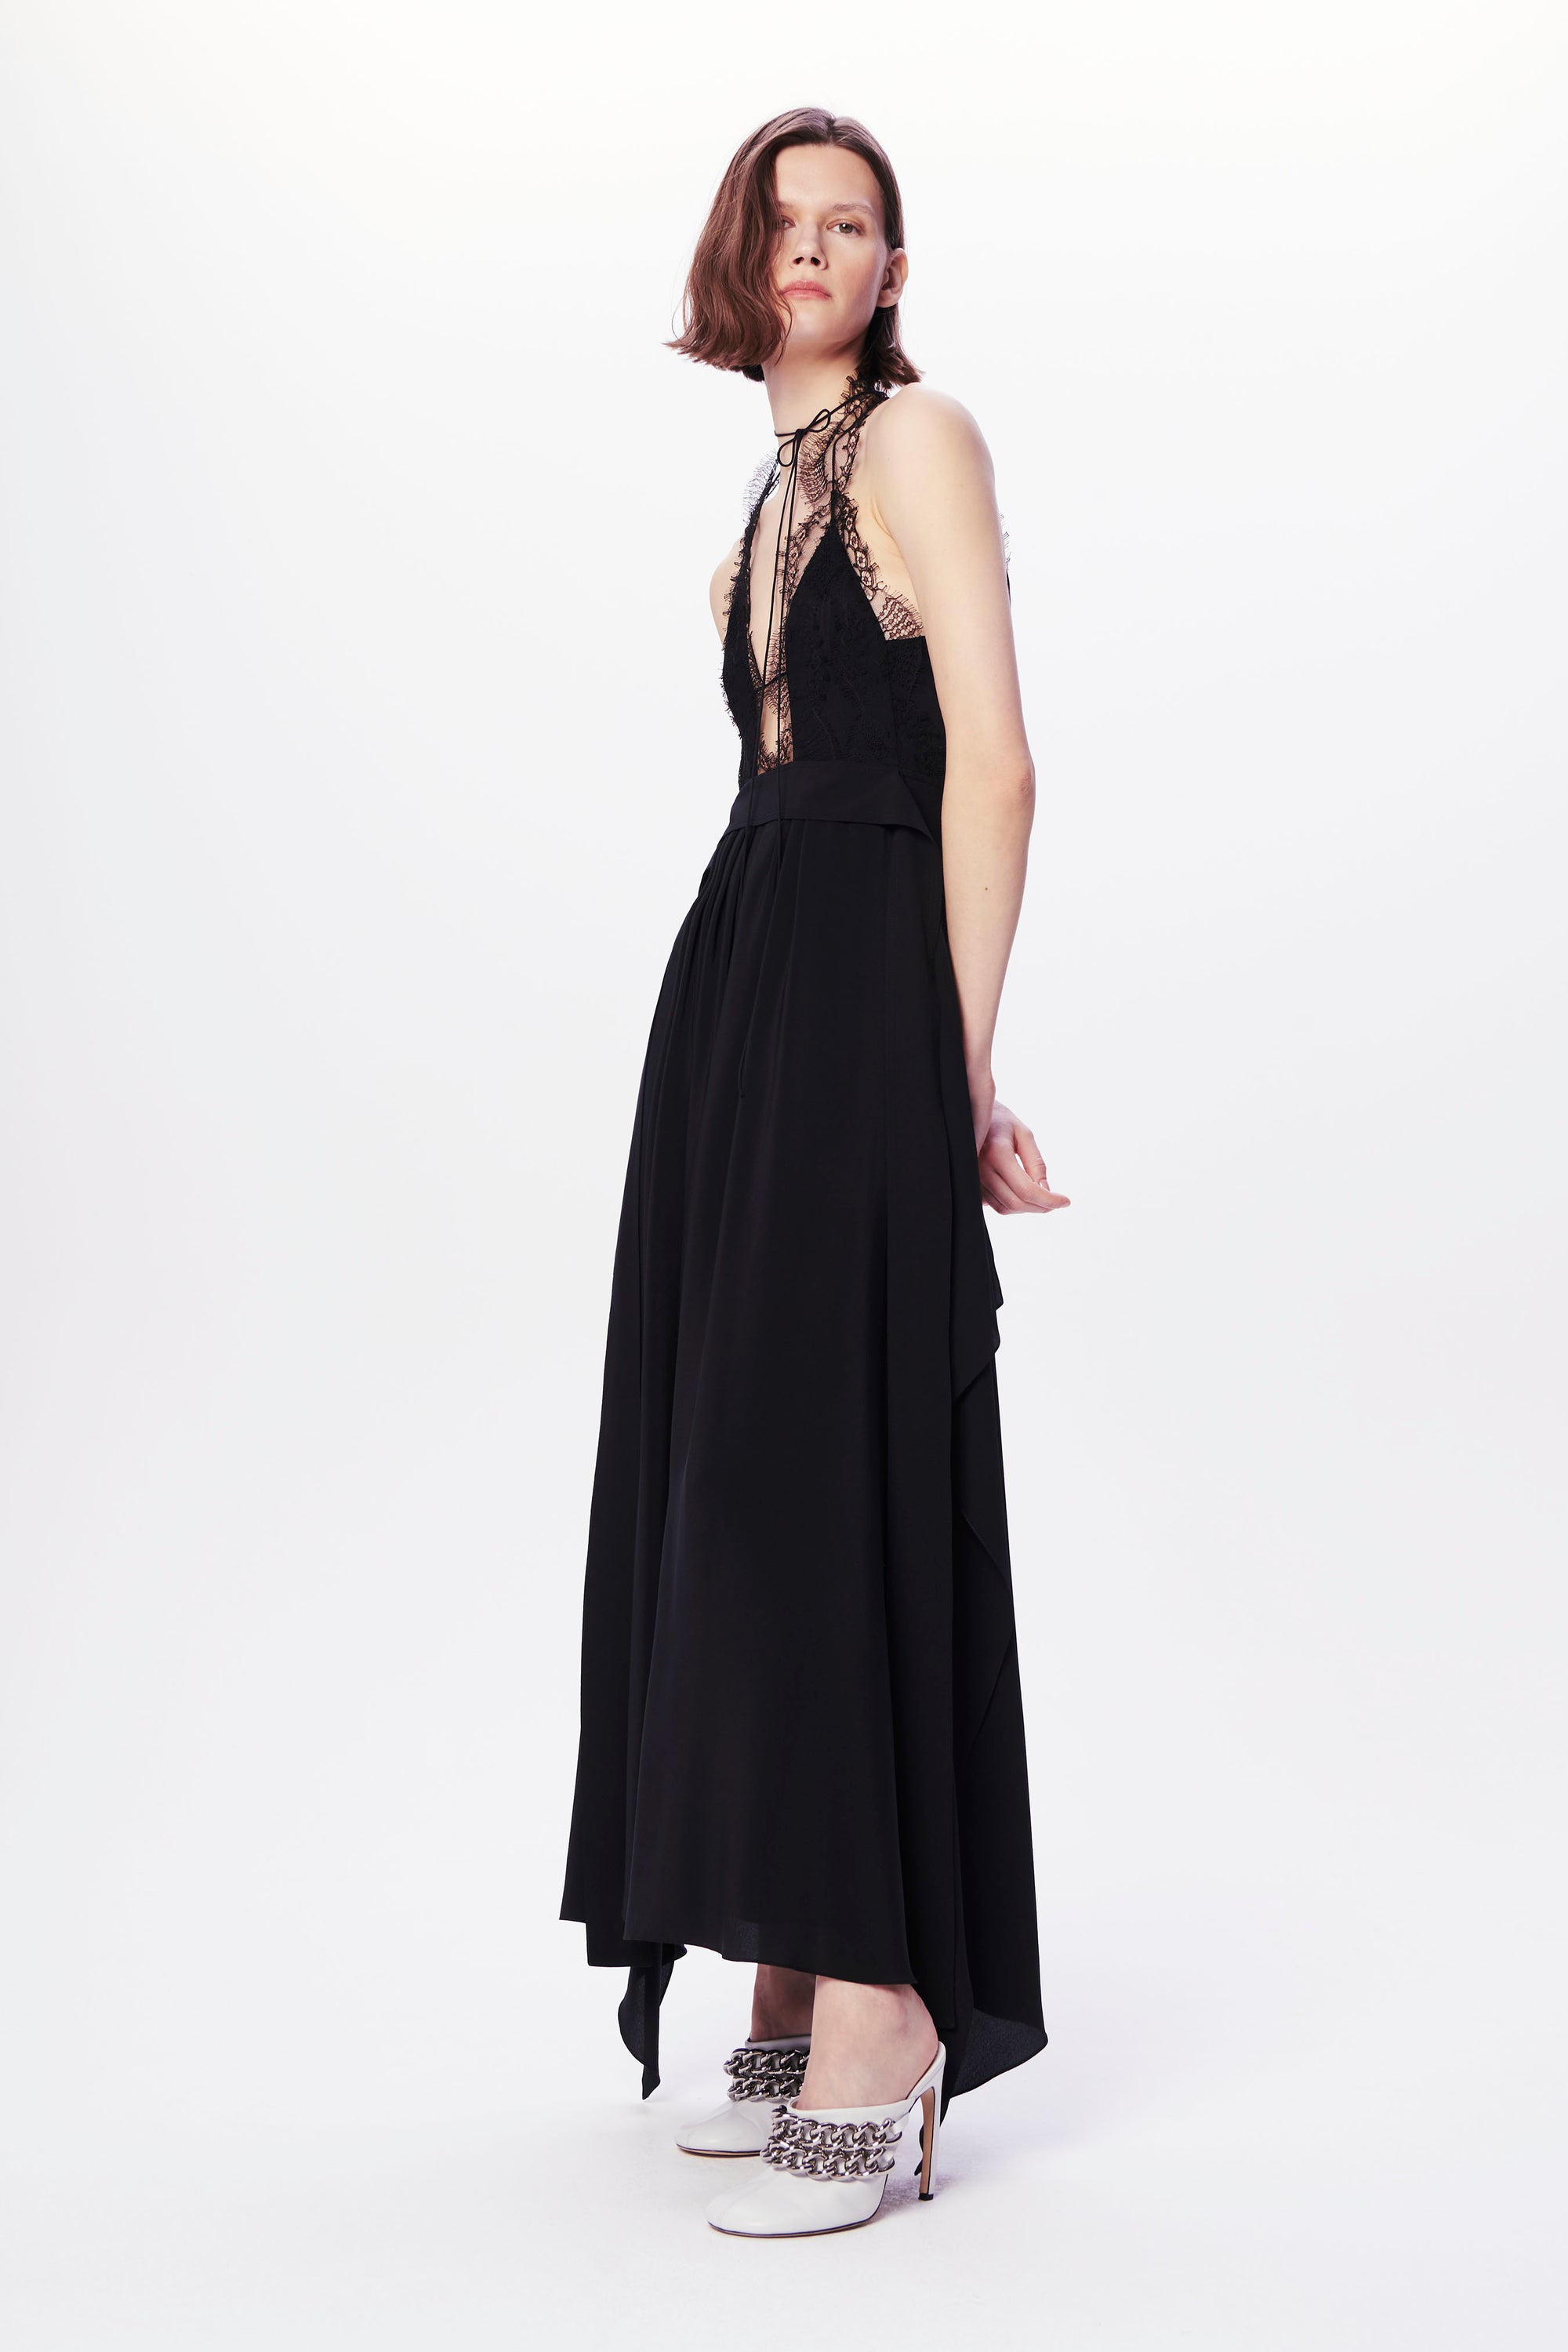 Lace Neckline Cami Dress in Black